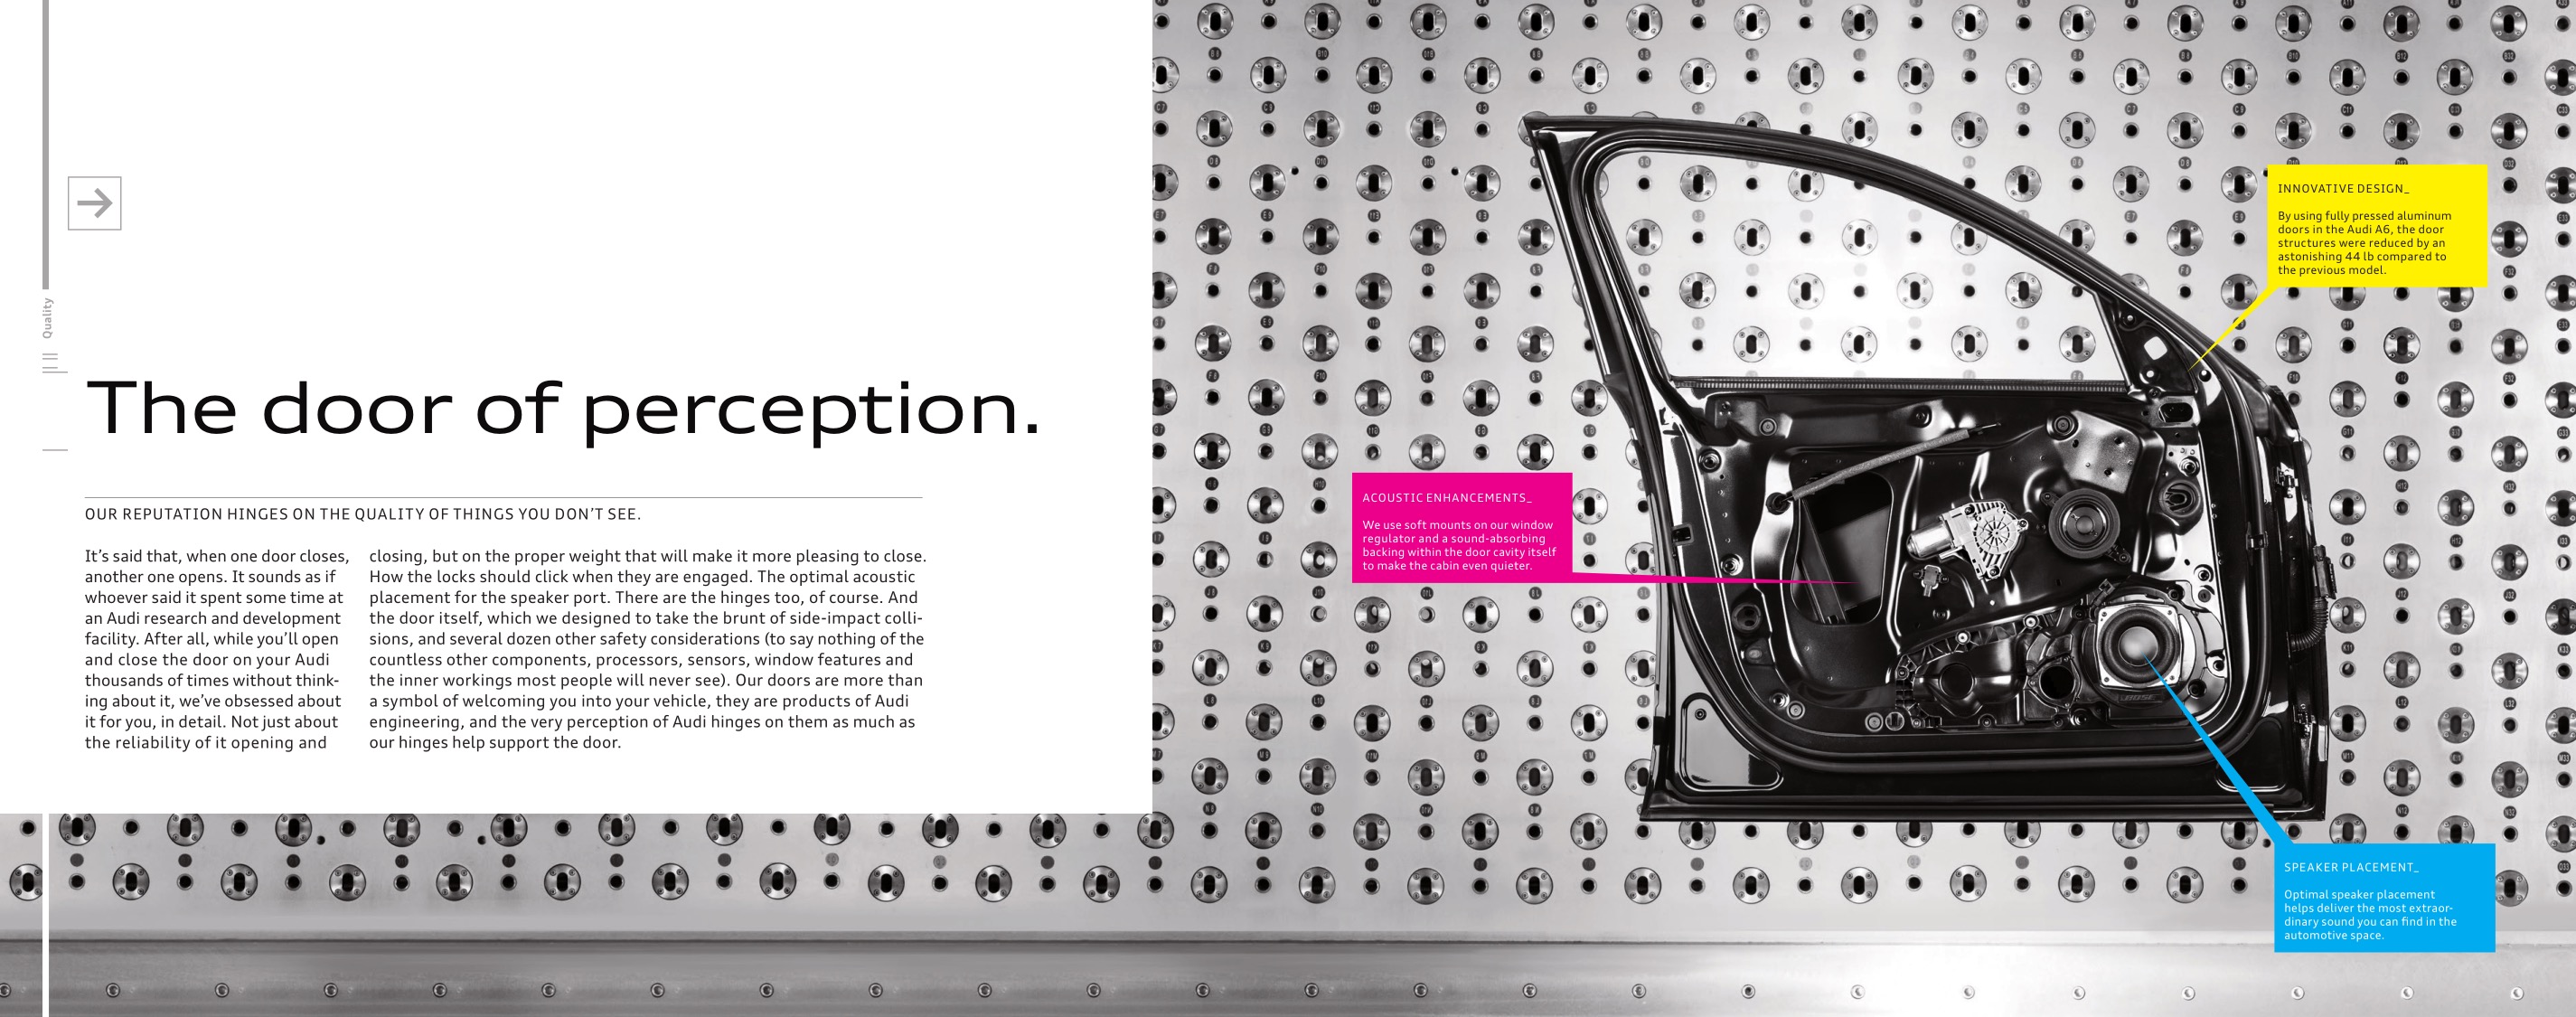 2015 Audi A7 Brochure Page 4